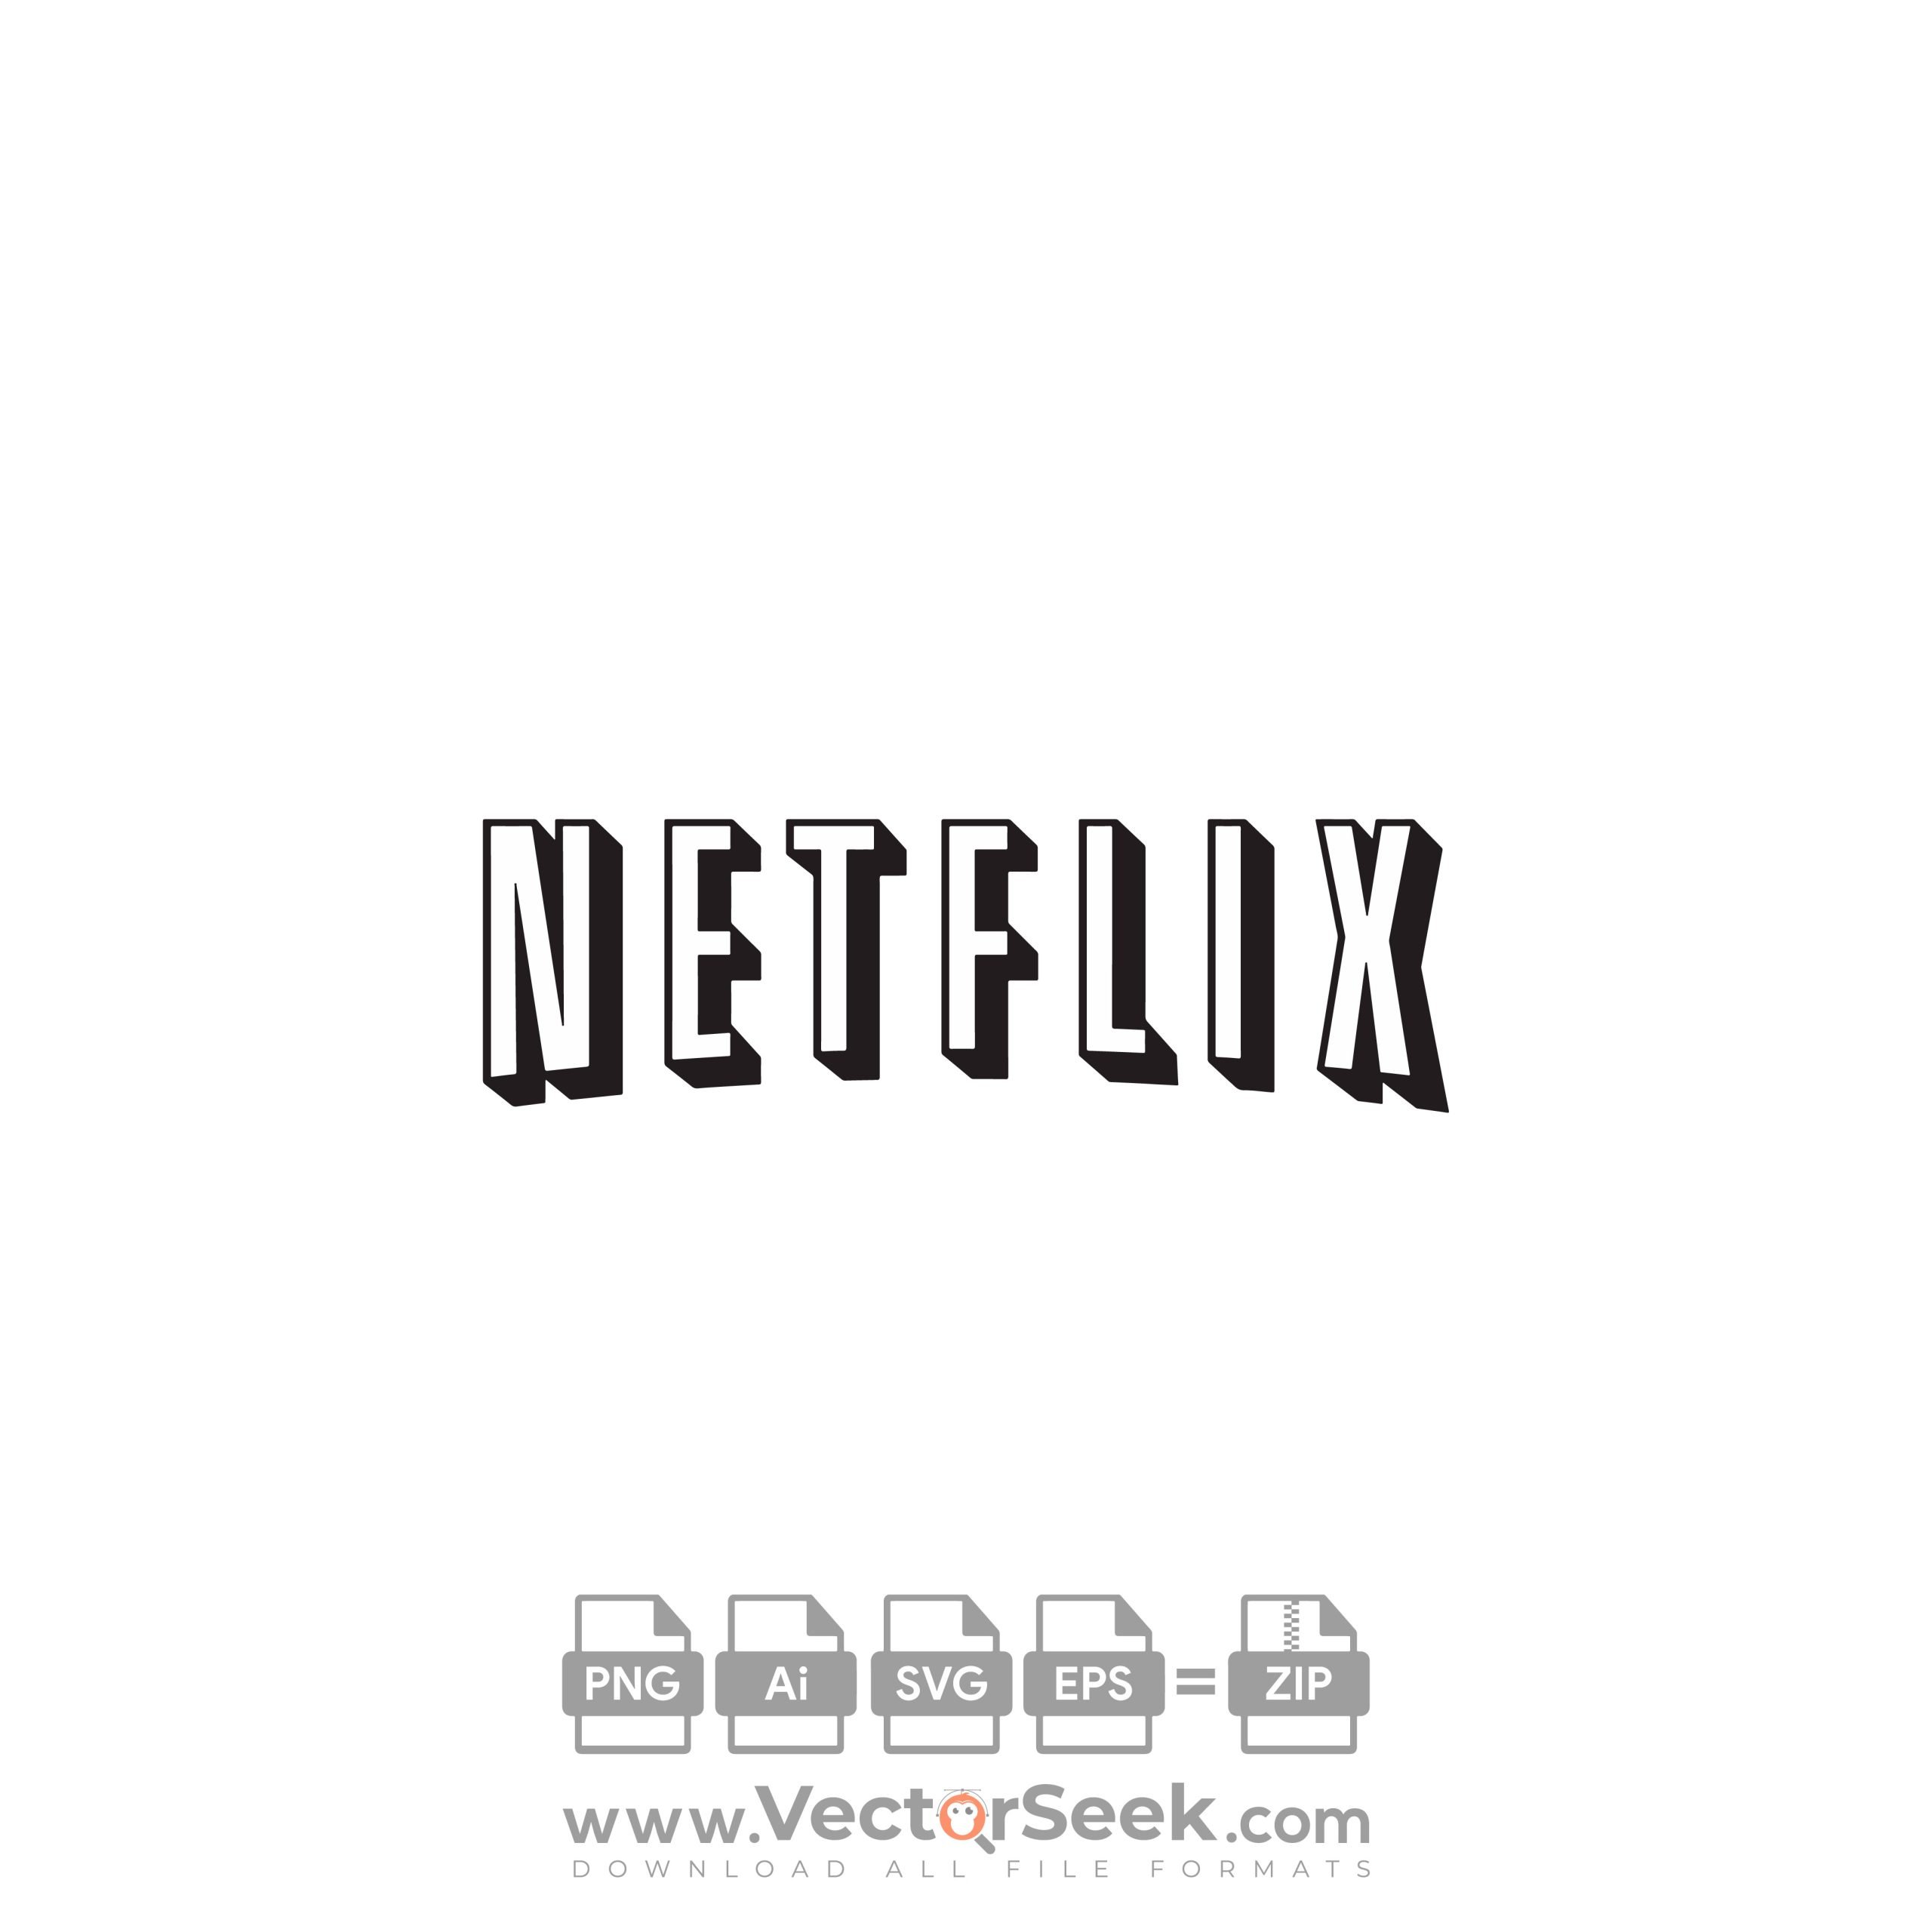 Netflix Logo PNG Transparent & SVG Vector - Freebie Supply